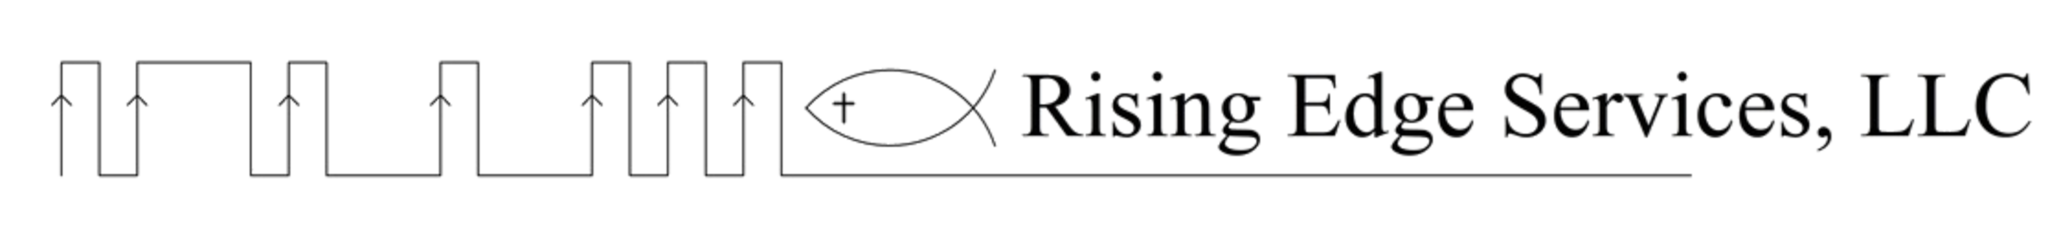 Rising Edge Services Logo